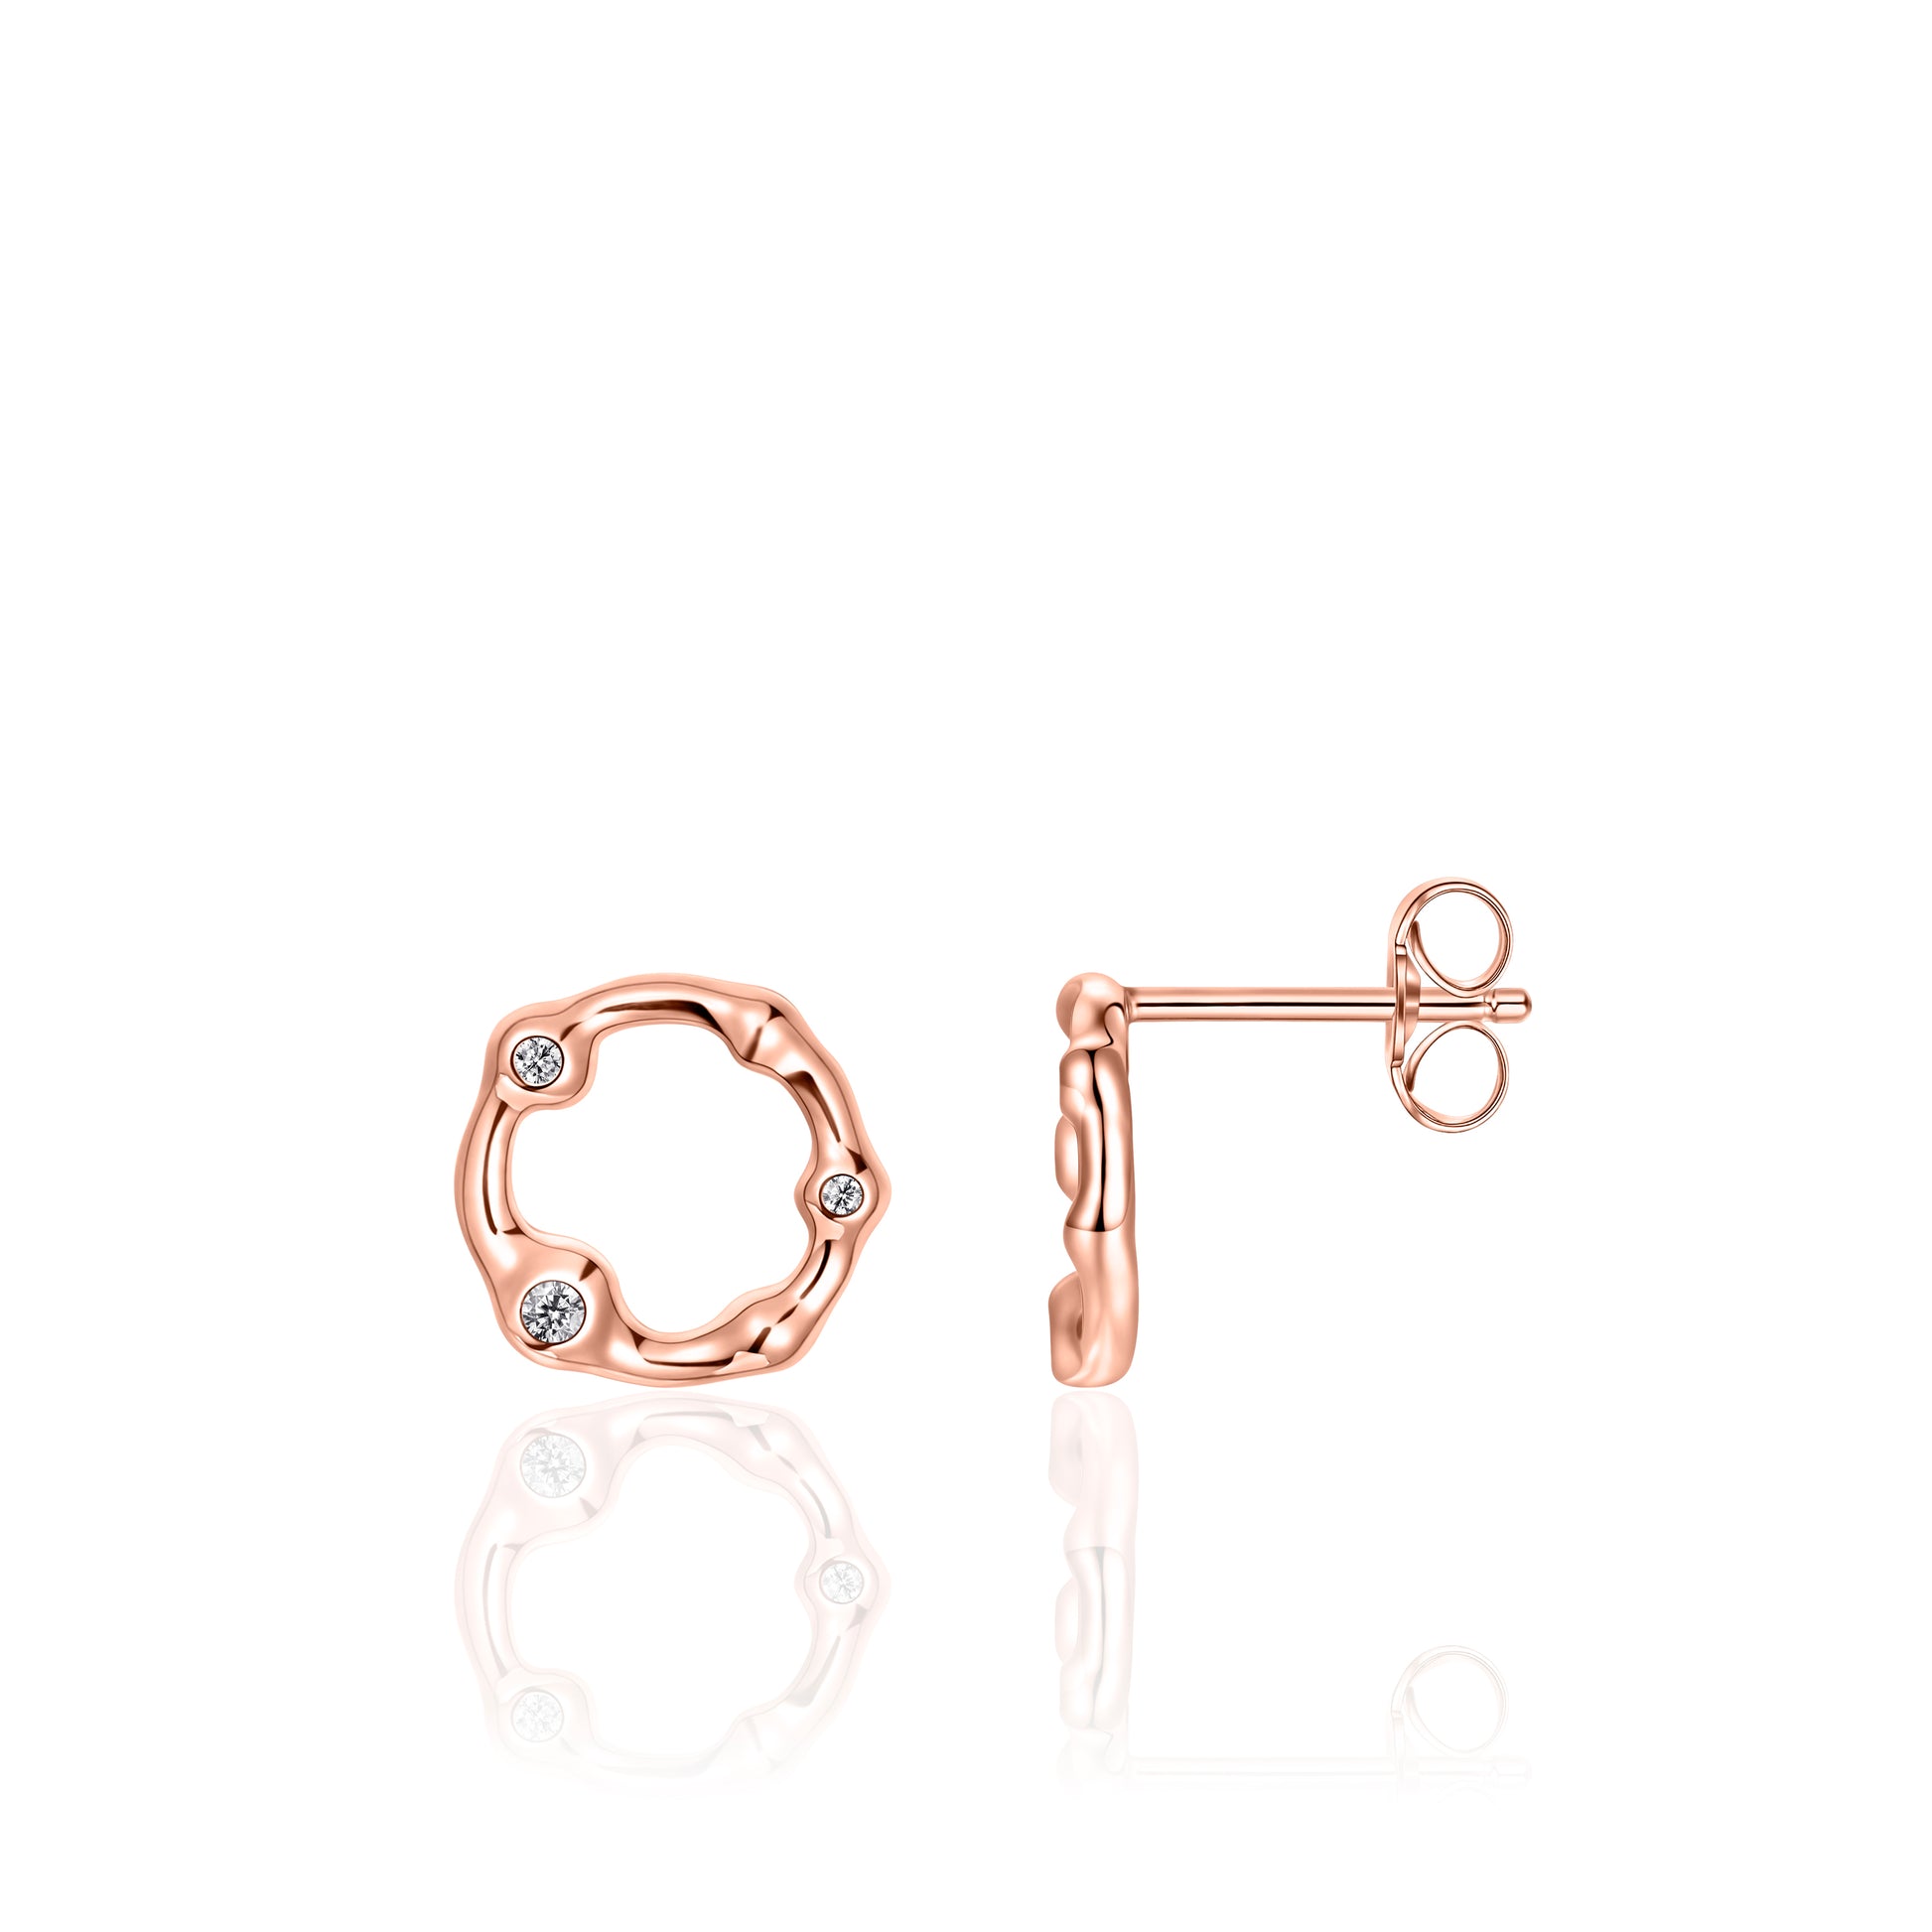 ORGANIC 10mm CZ Stud Earrings - Rose Gold - John Ross Jewellers